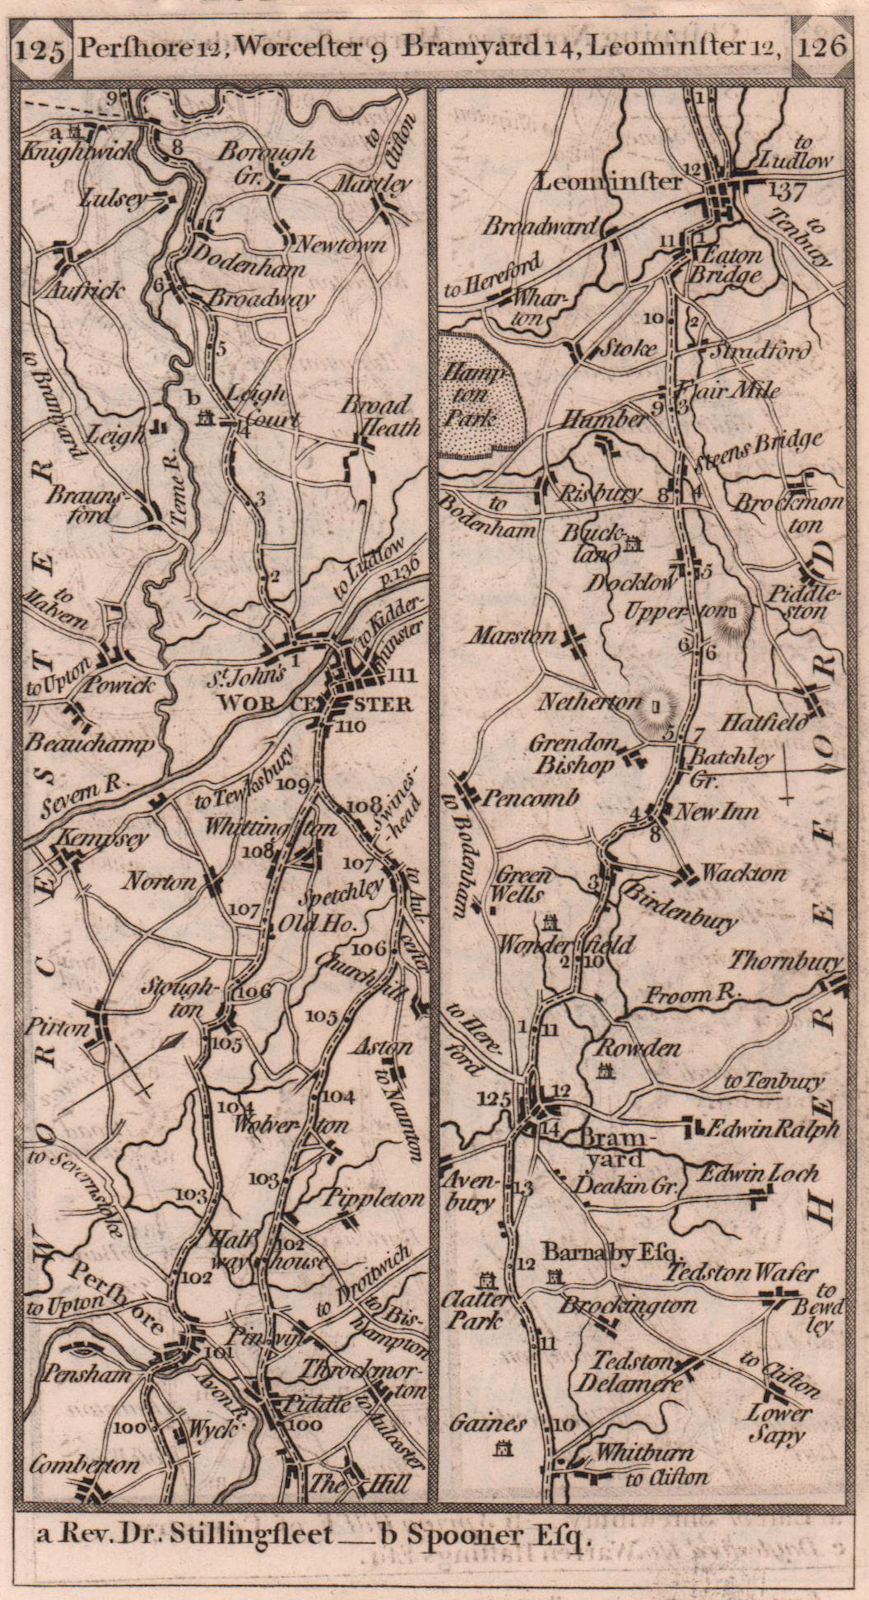 Associate Product Pershore - Worcester - Bromyard - Leominster road strip map PATERSON 1803